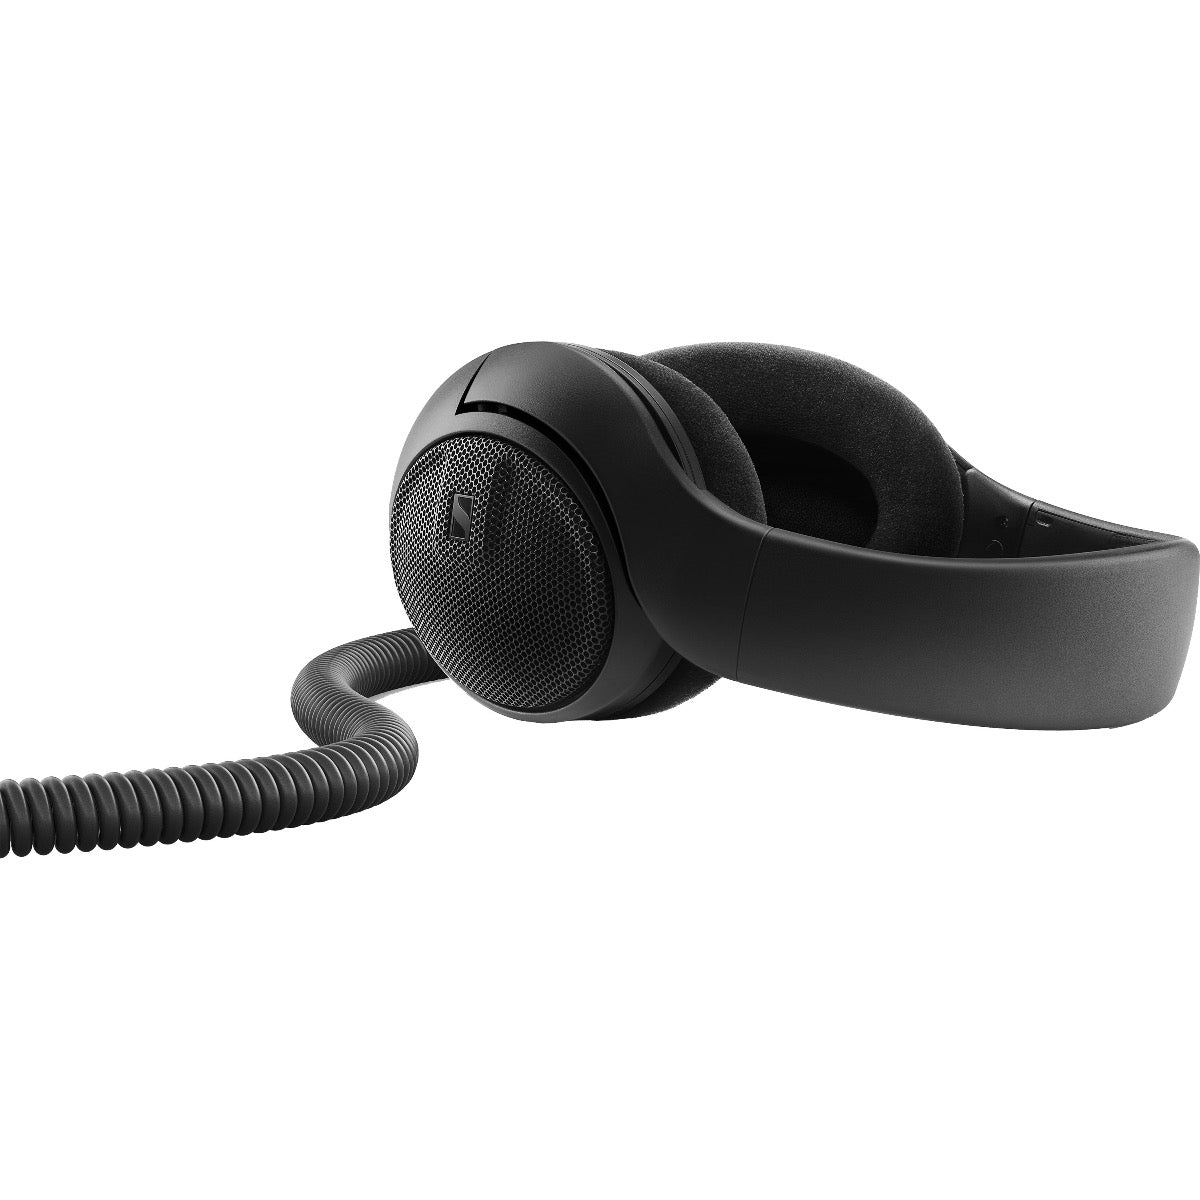 Sennheiser HD 400 Pro Studio Reference Headphones - Black View 2